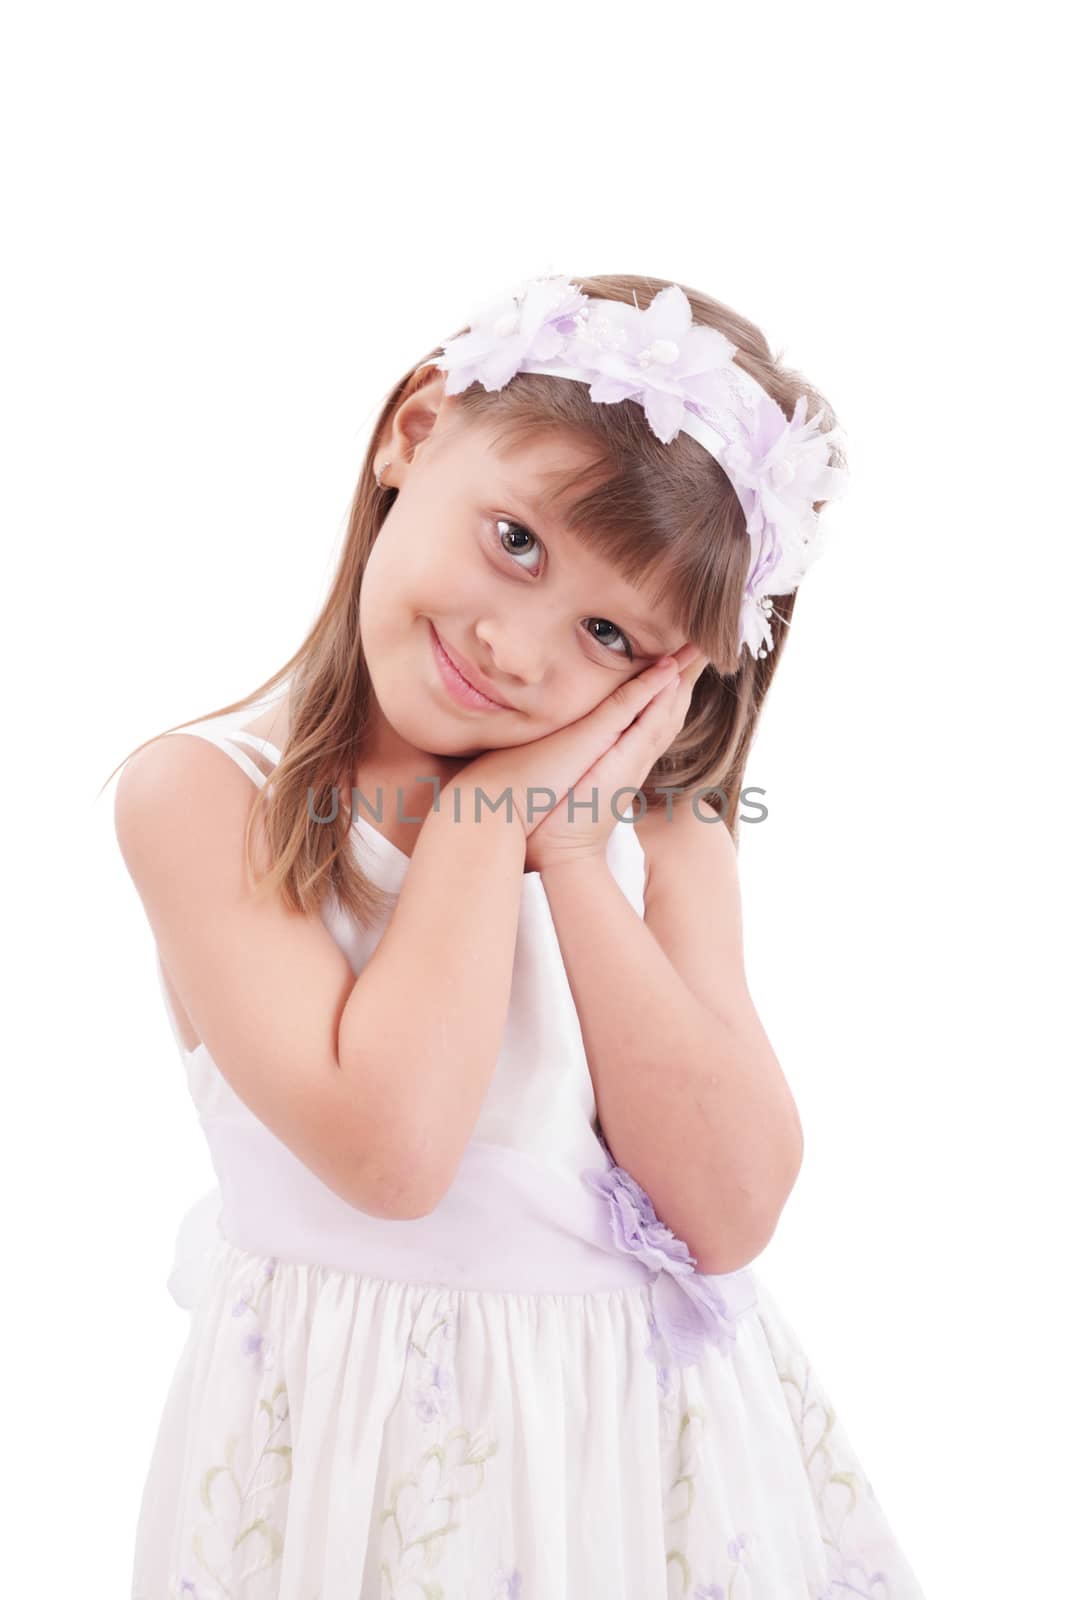 happy smiling little girl on white background in studio by dacasdo